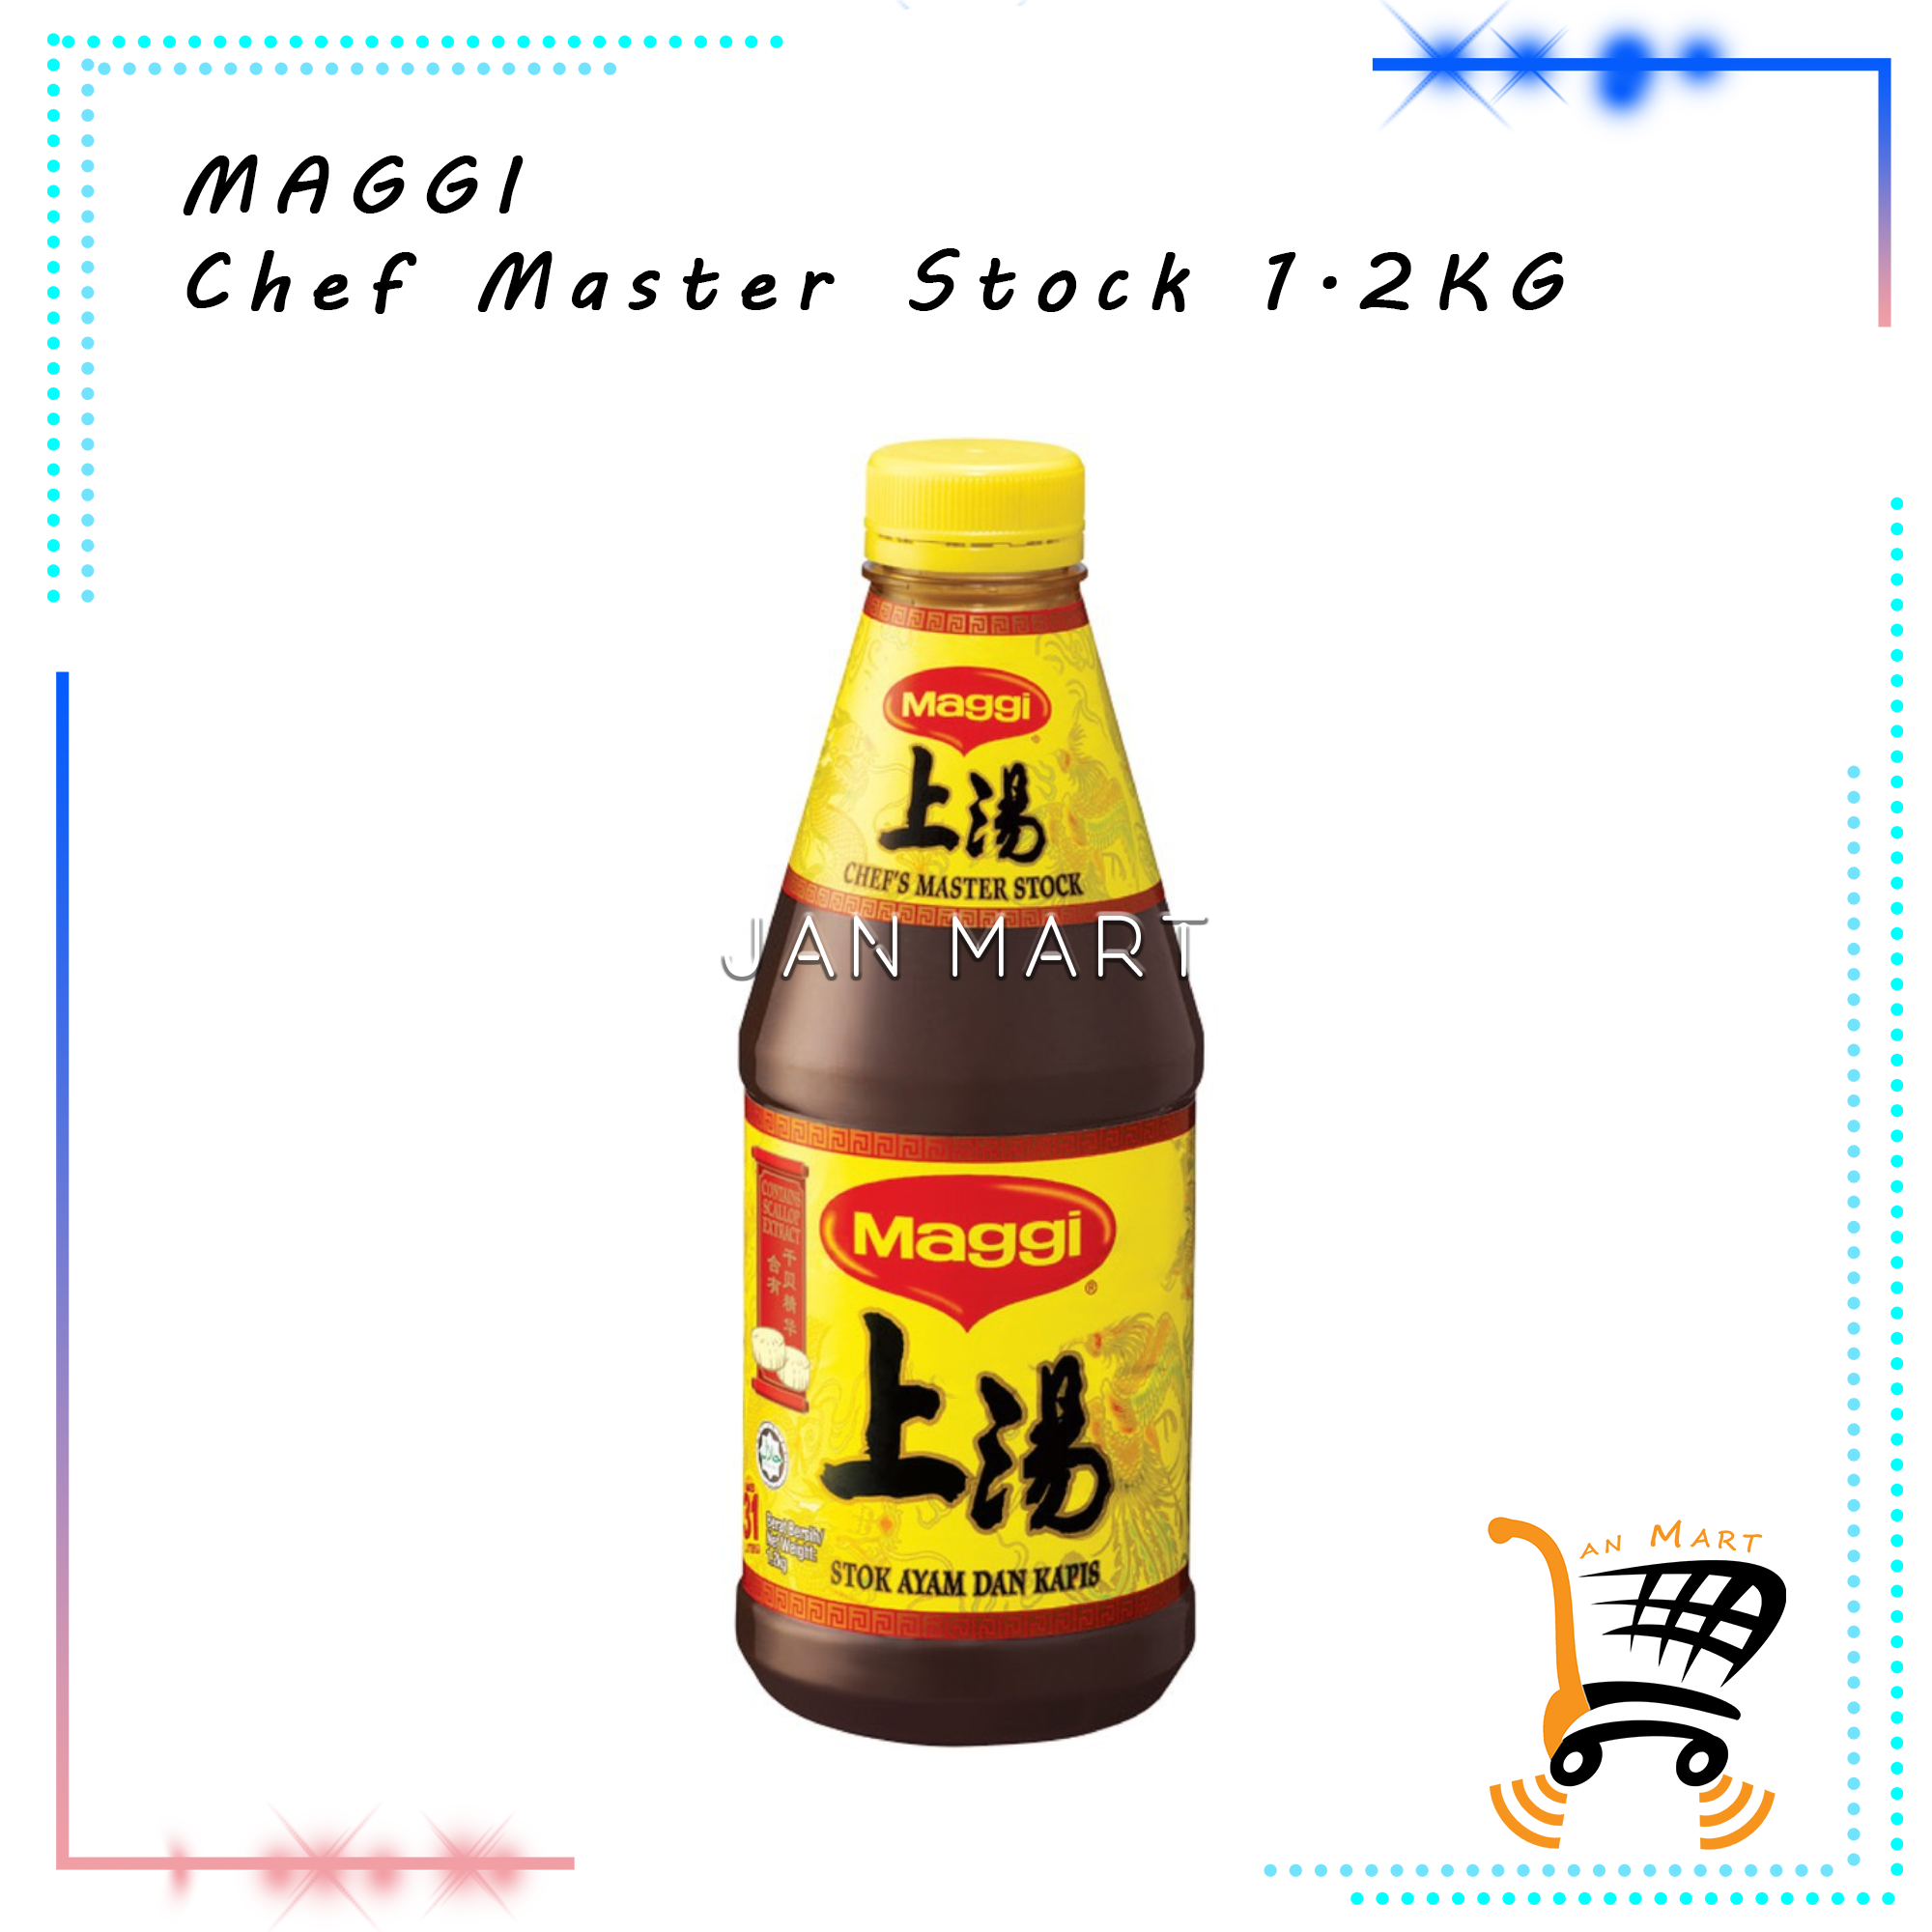 MAGGI Chef Master Stock 1.2KG 美极牌上湯